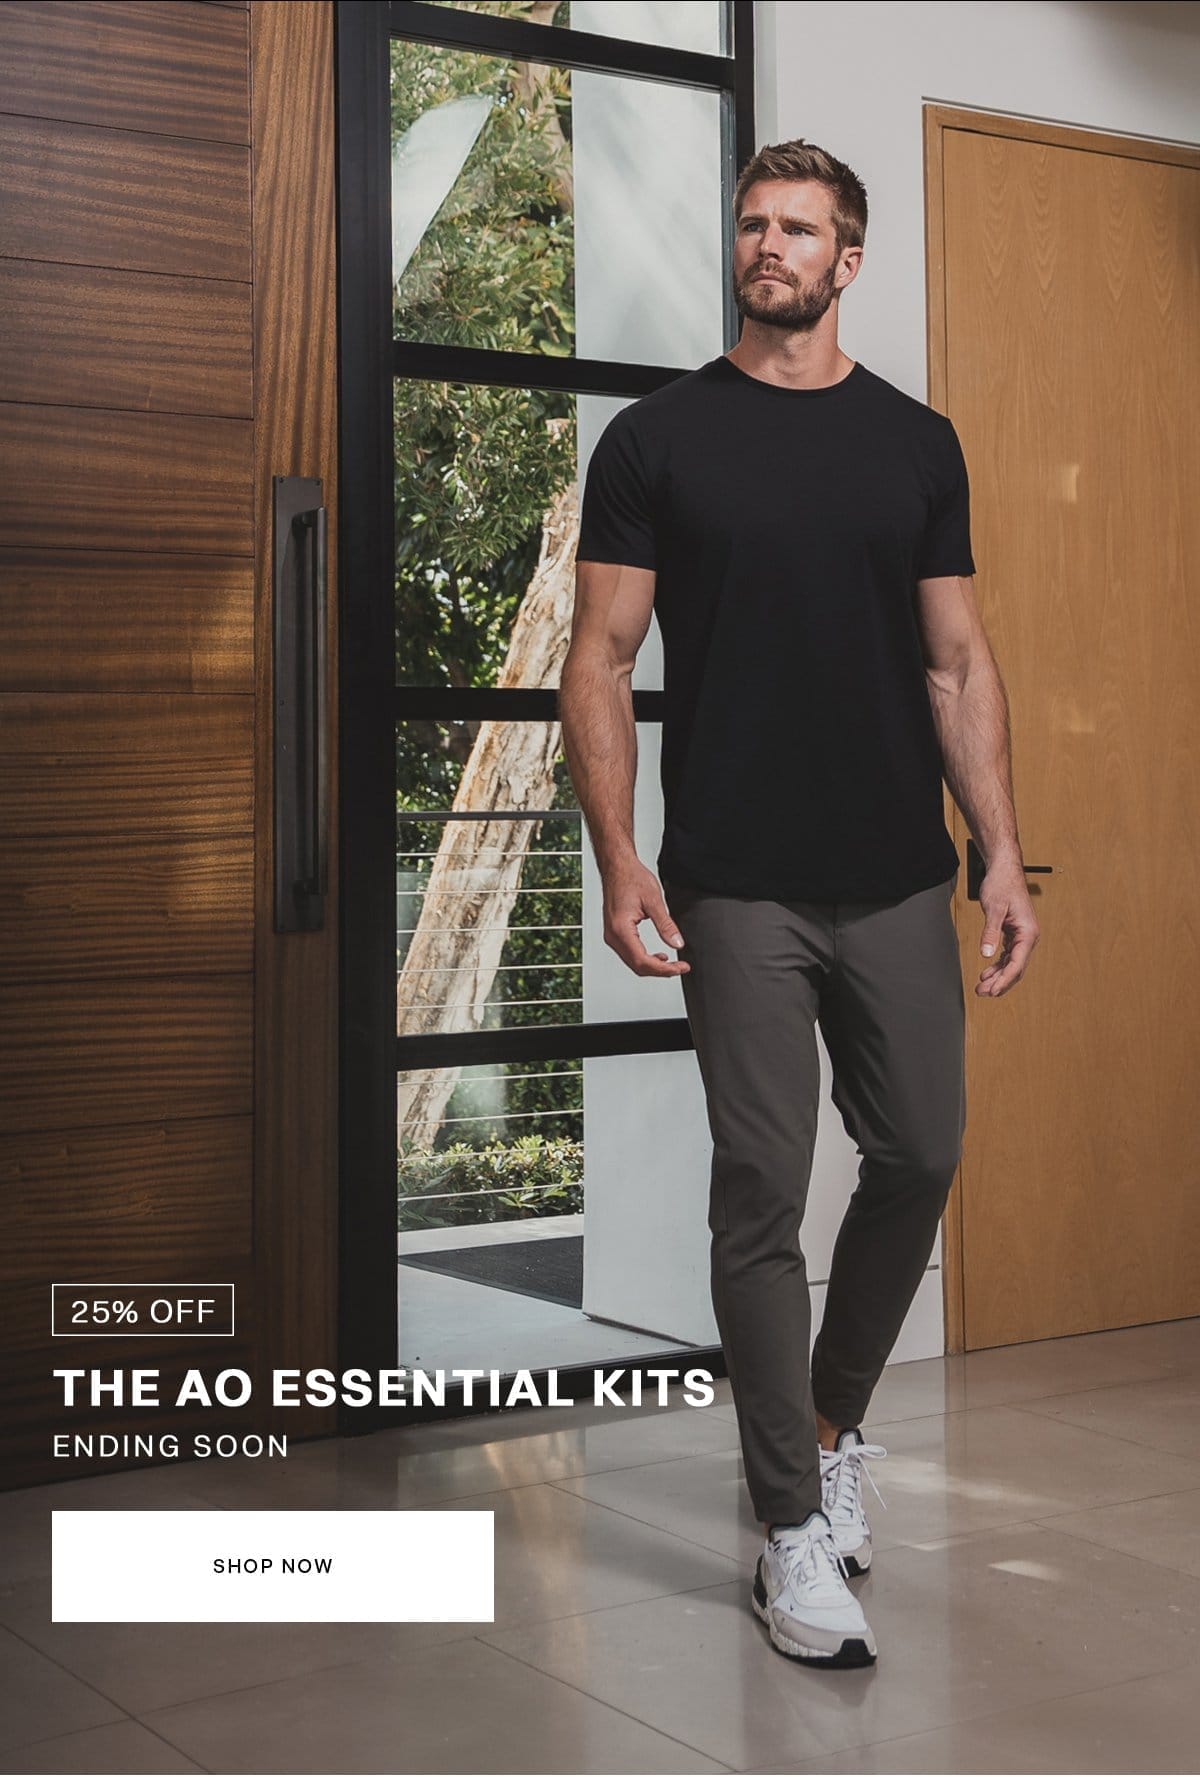 The AO Essential Kits